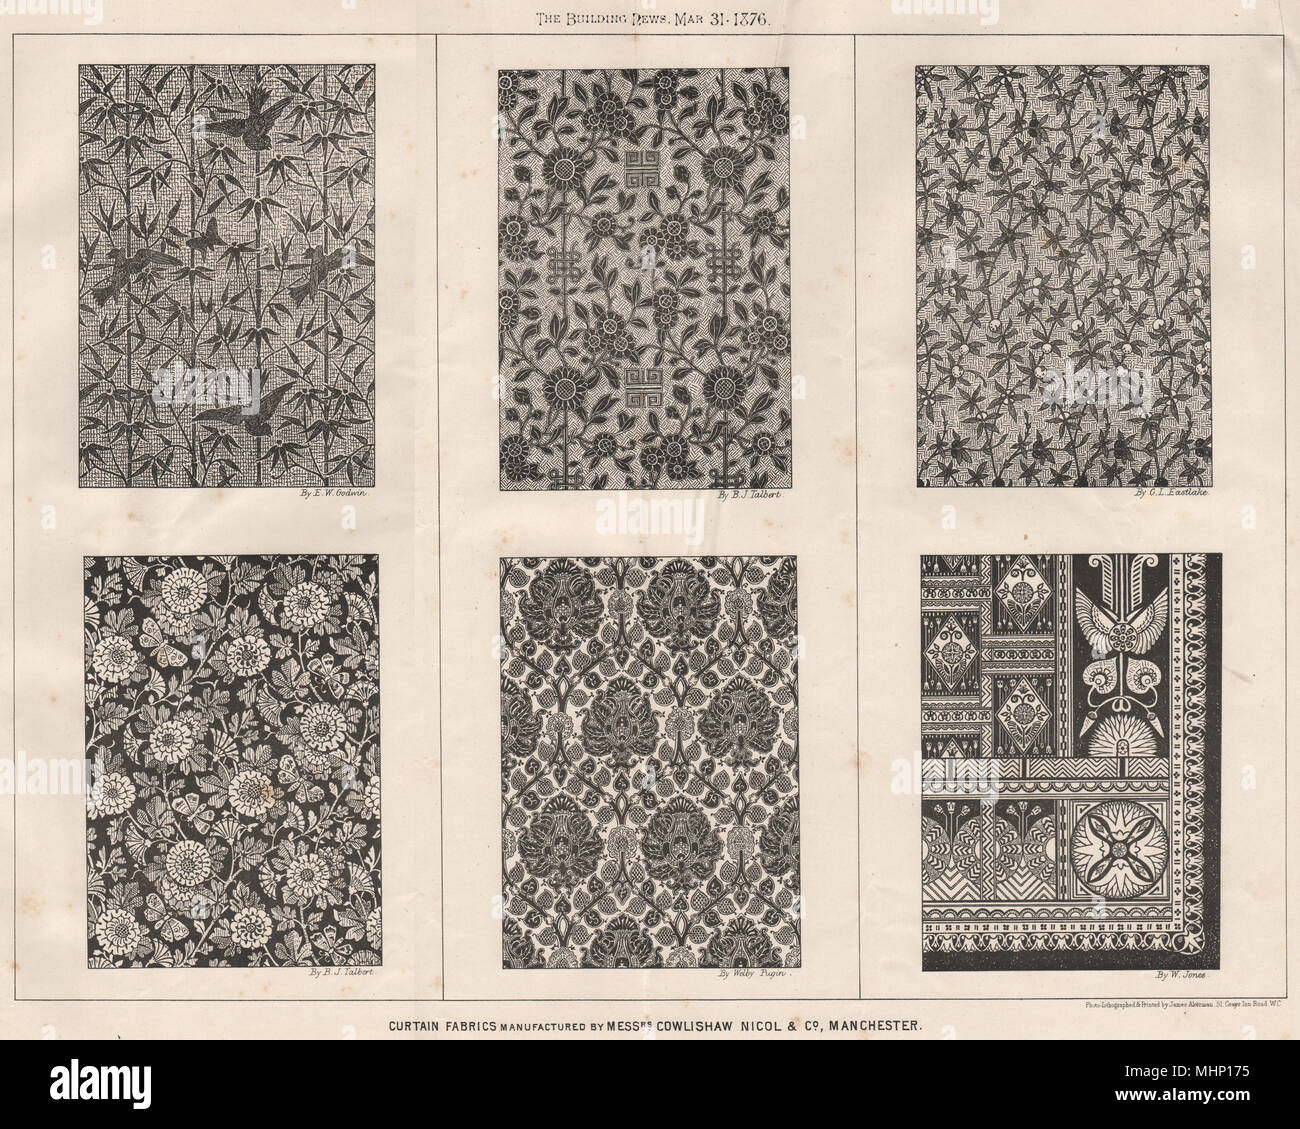 Curtain fabrics manufactured by Cowlishaw Nicol & Co., Manchester 1876 print Stock Photo